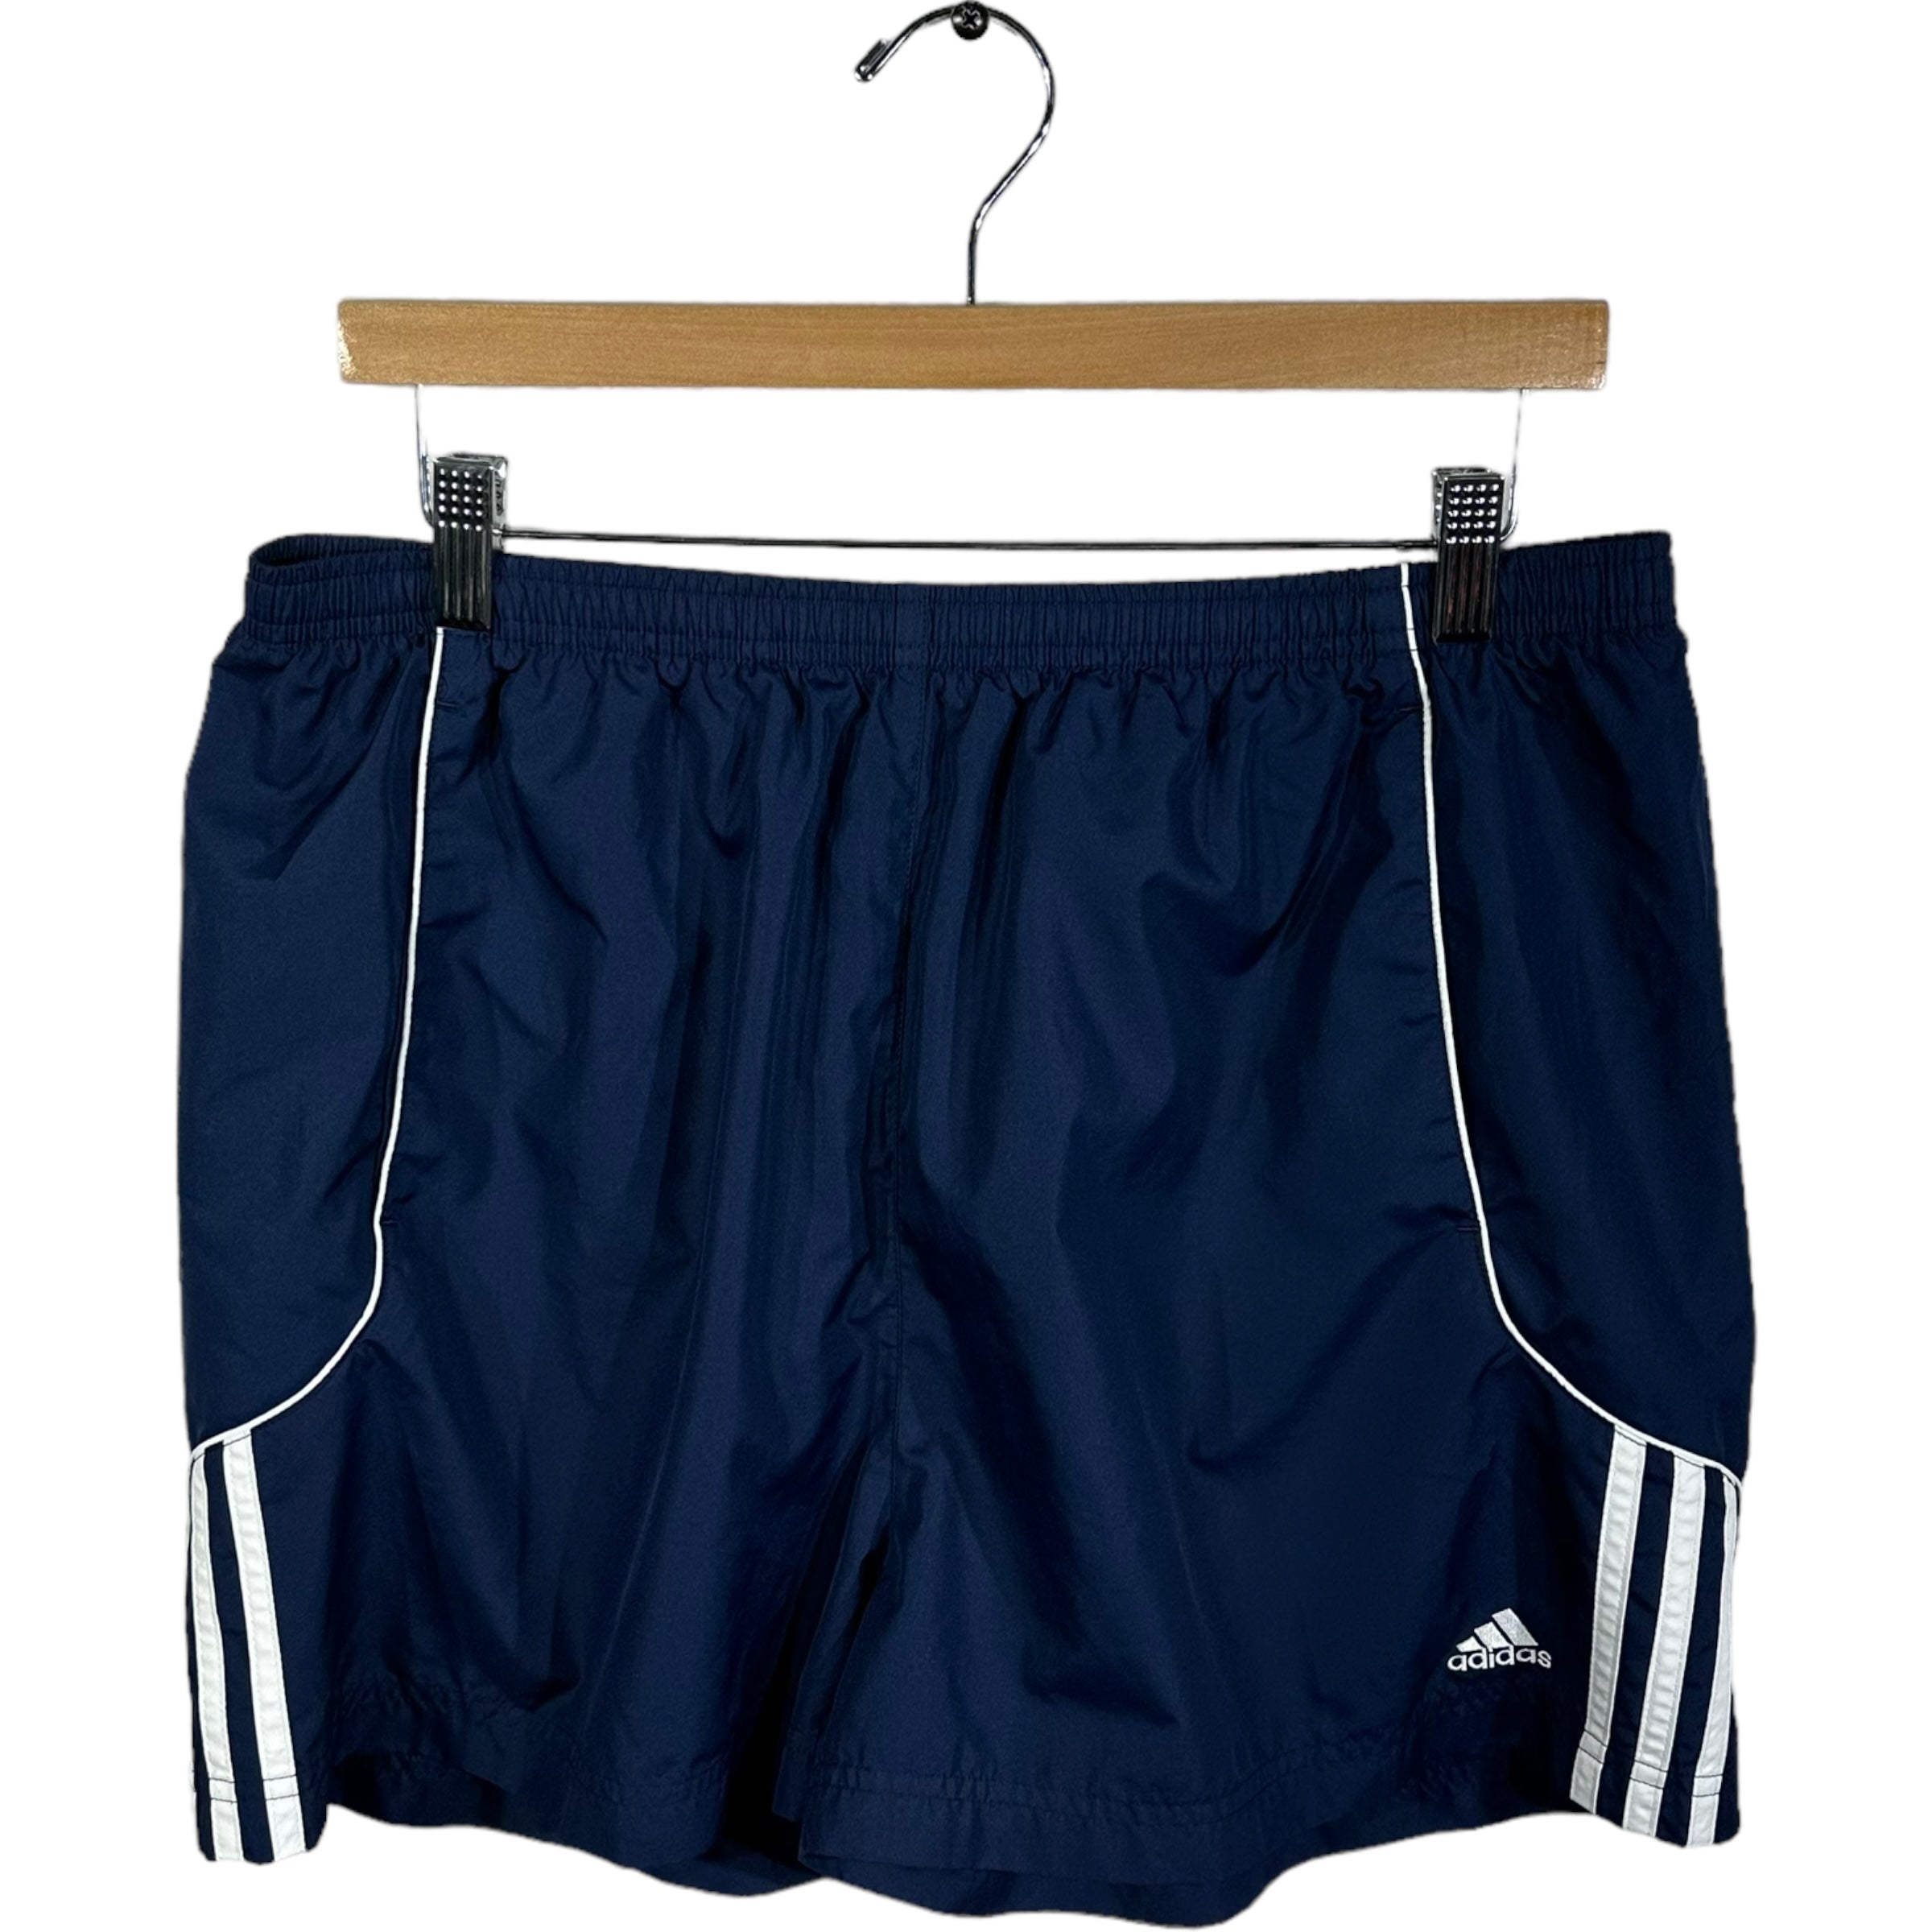 Vintage Adidas Gym Shorts